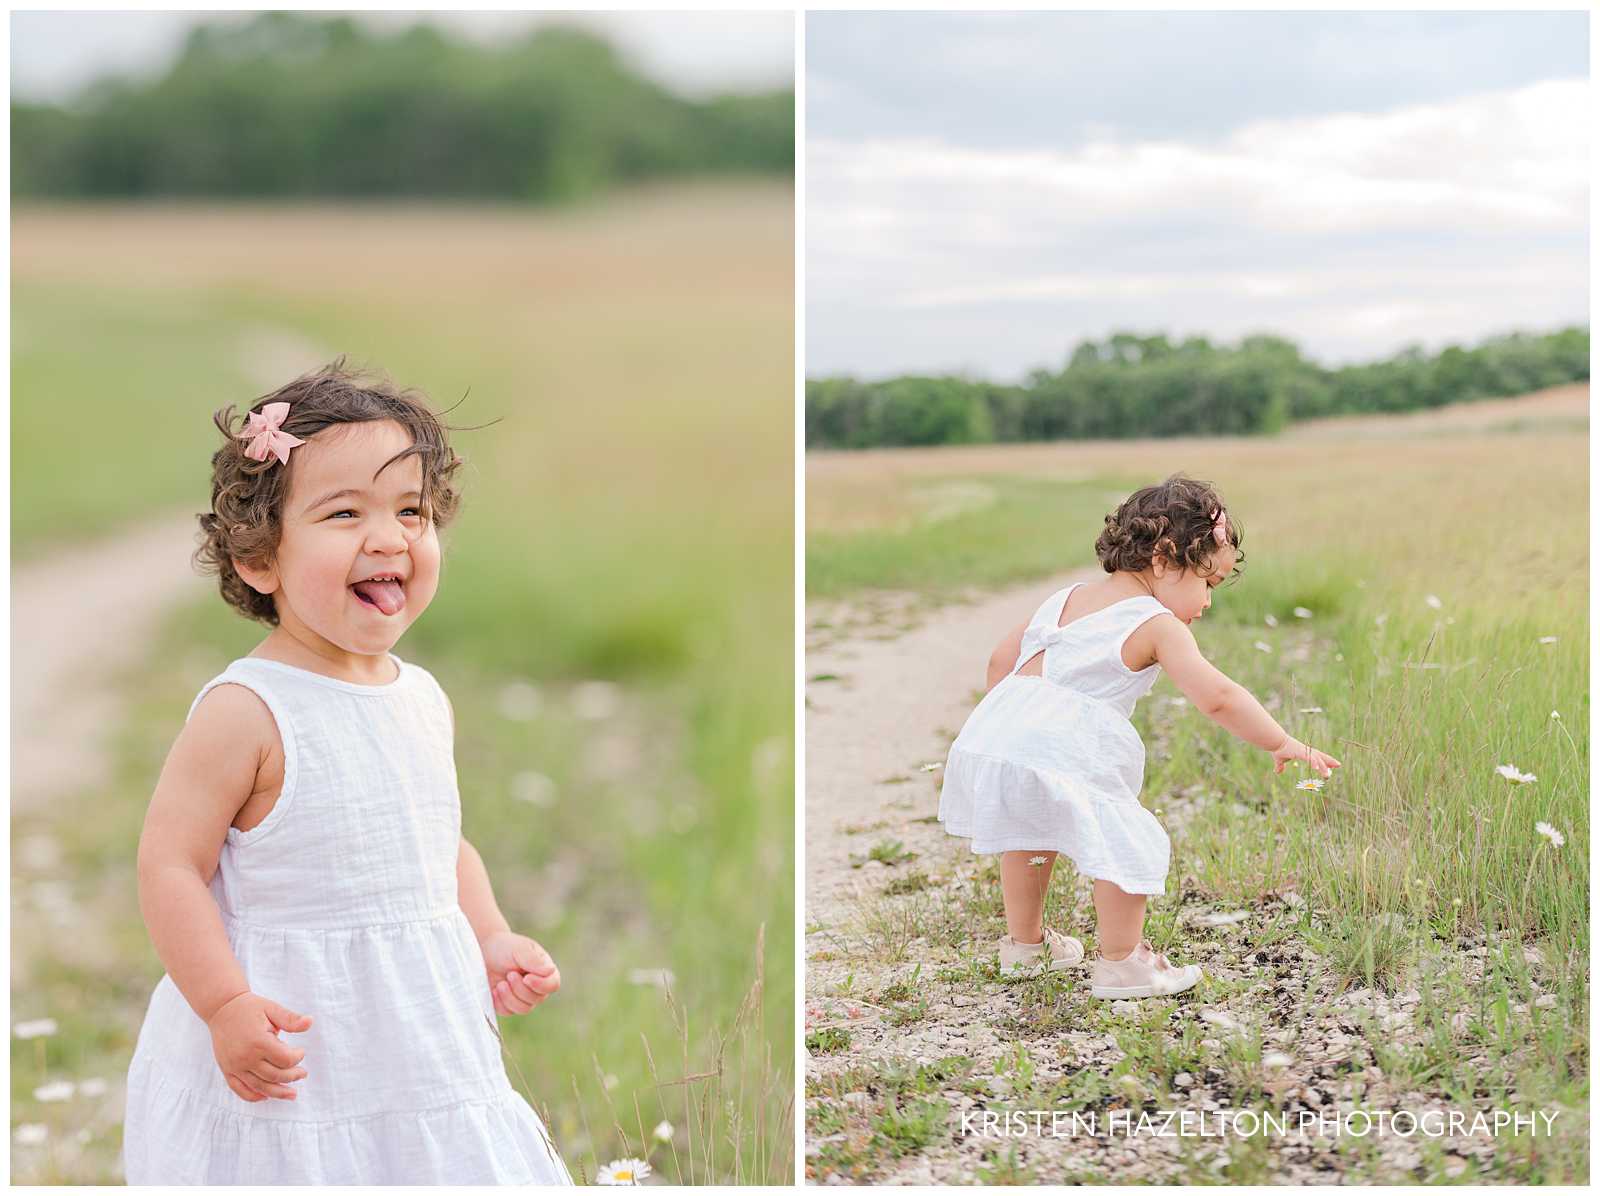 Toddler girl picking flowers by Forest Park, IL photographer Kristen Hazelton